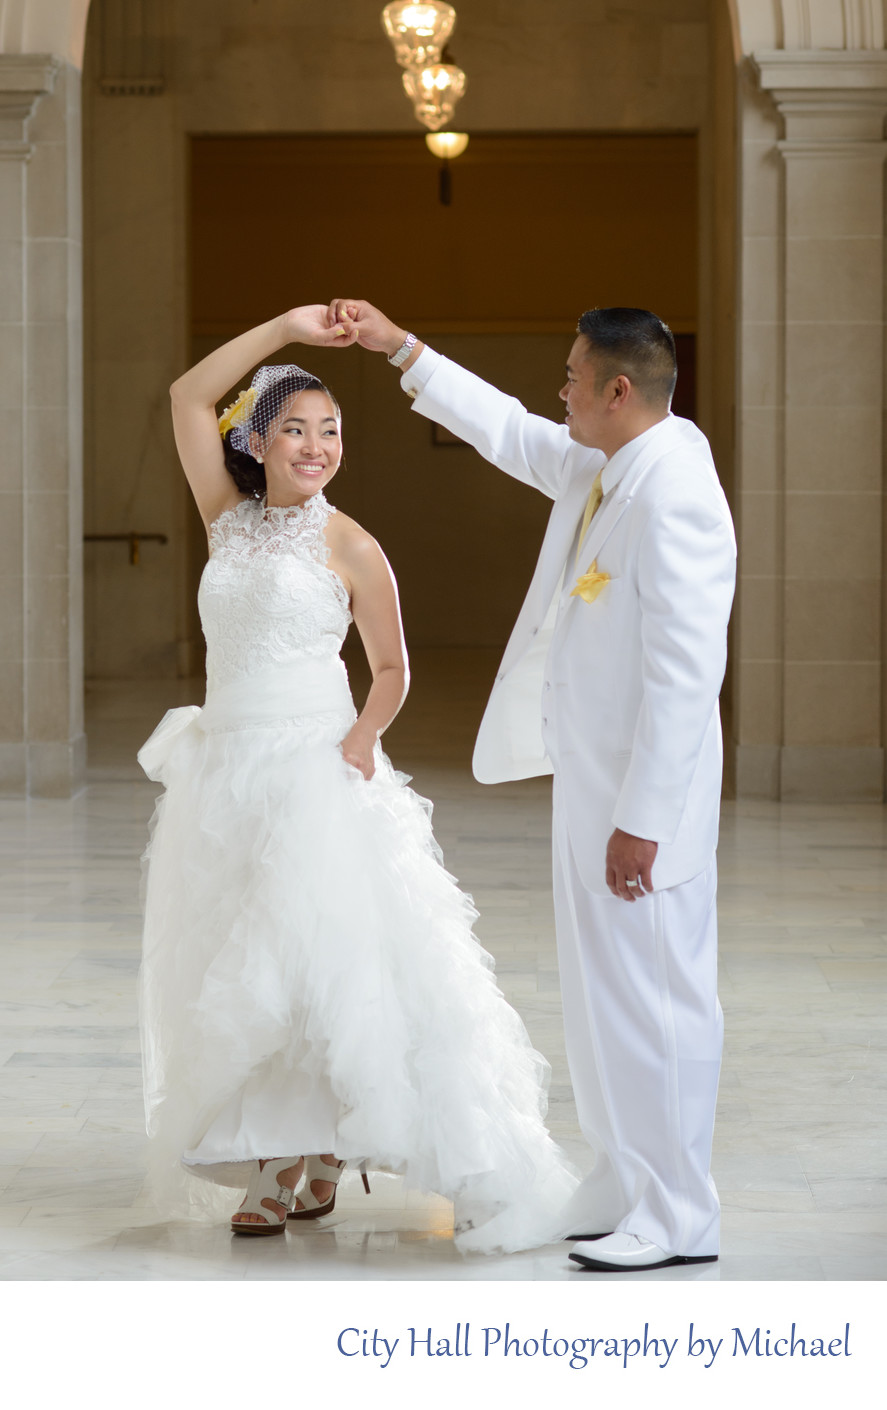 Wedding Photography San Francisco City Hall - Dance Moves